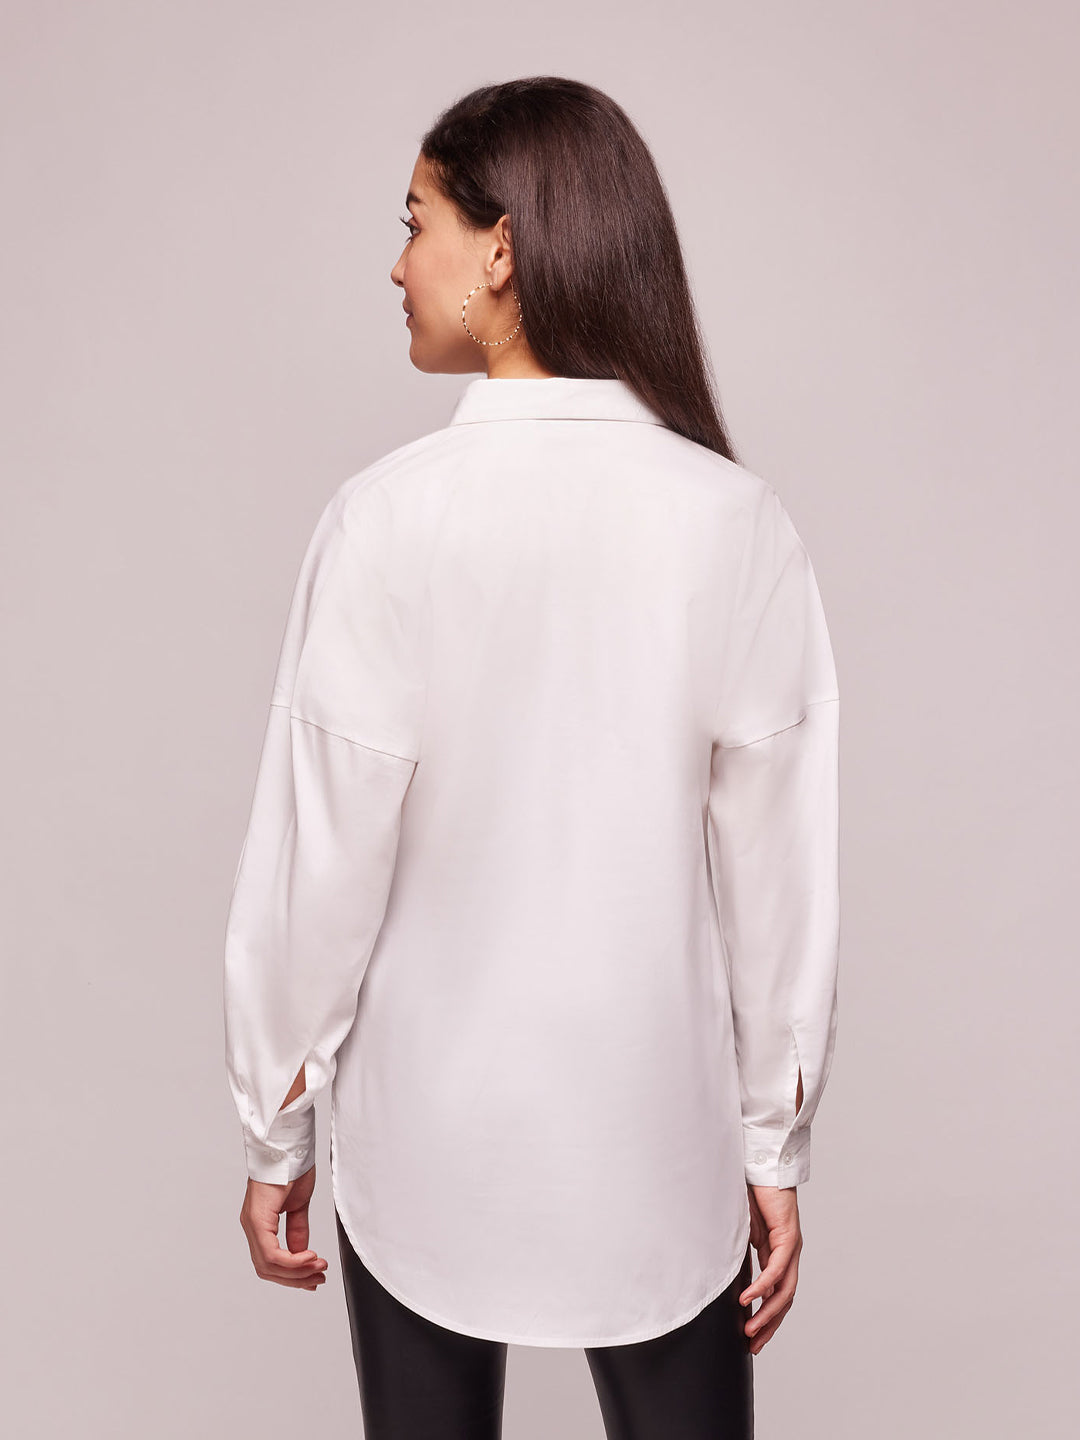 Bombay High Women's Bright White Oversized High-Low Hem Solid Shirt